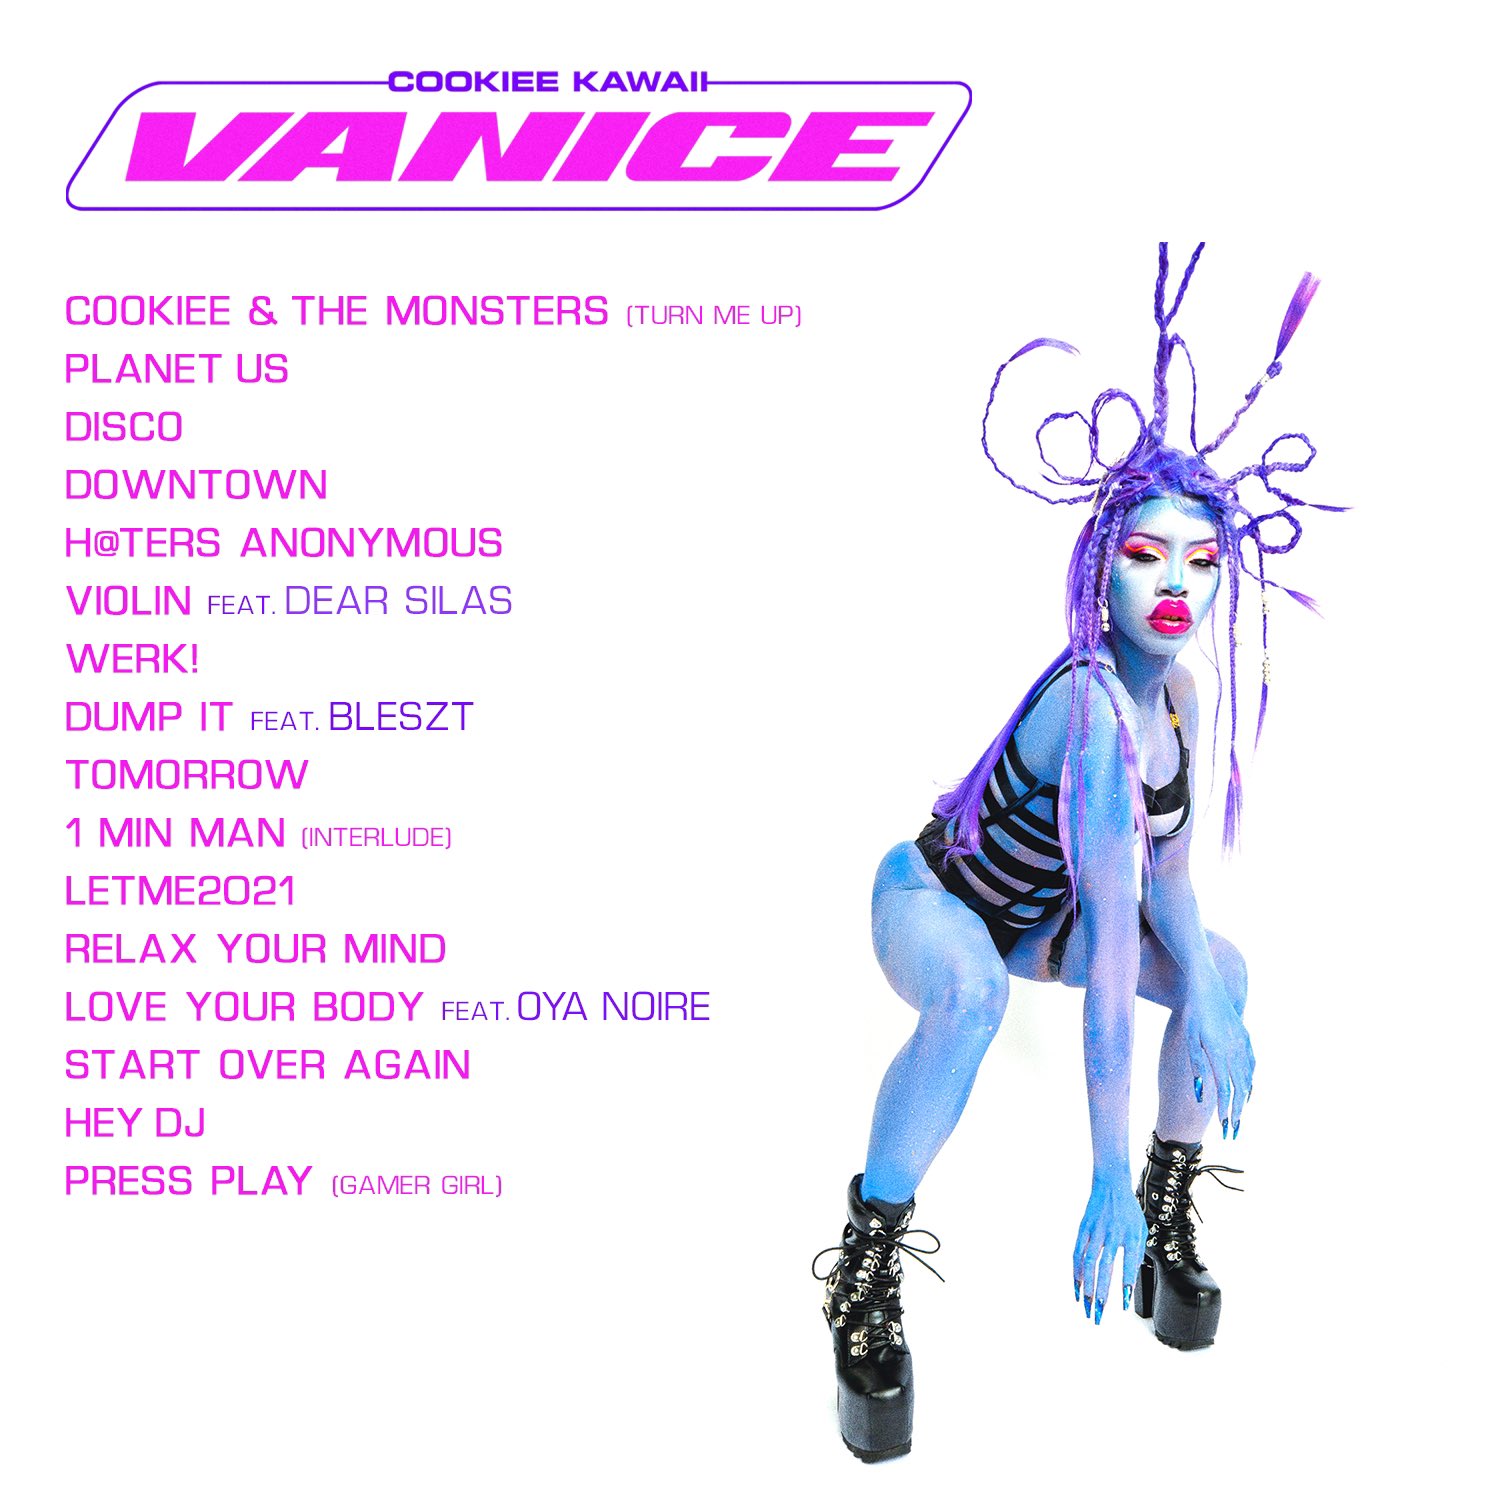 Avyss Magazine ジャージークラブへの愛｜cookiee Kawaiiがデビューアルバム『vanice』をリリース